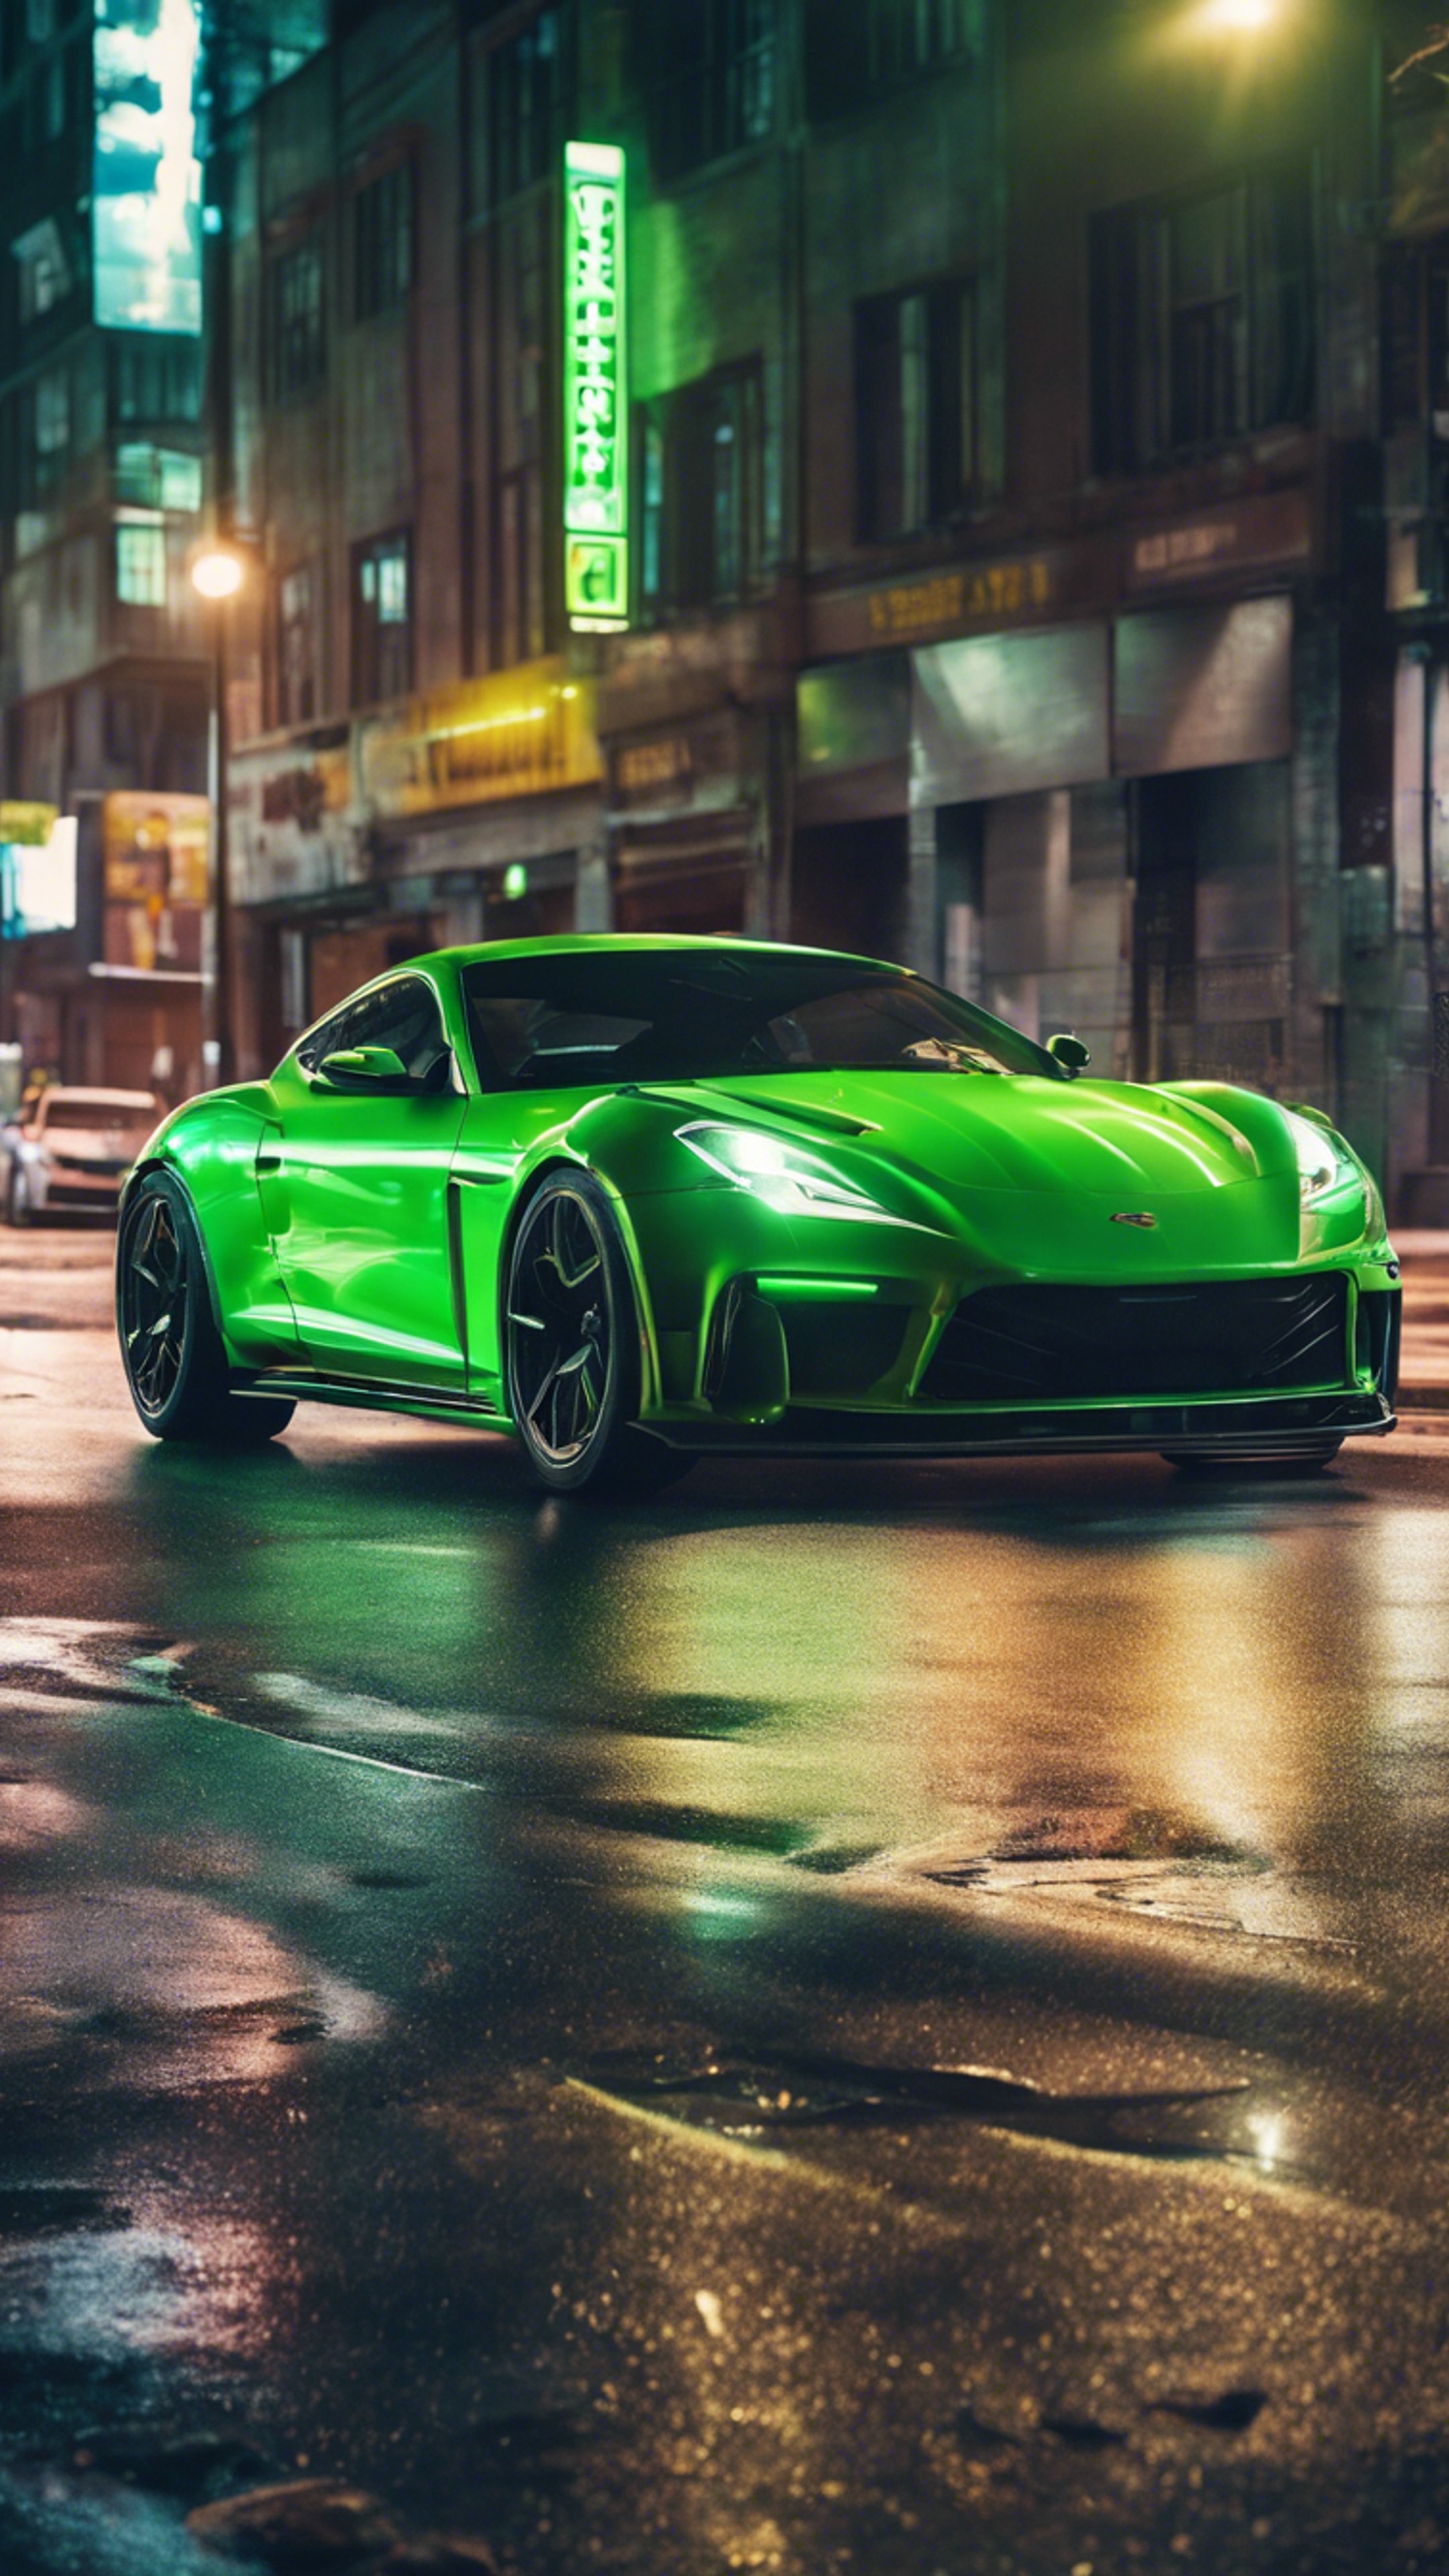 A cool neon green sports car racing down a city street at night. Tapeta[ff2aa681813144c0b5f6]